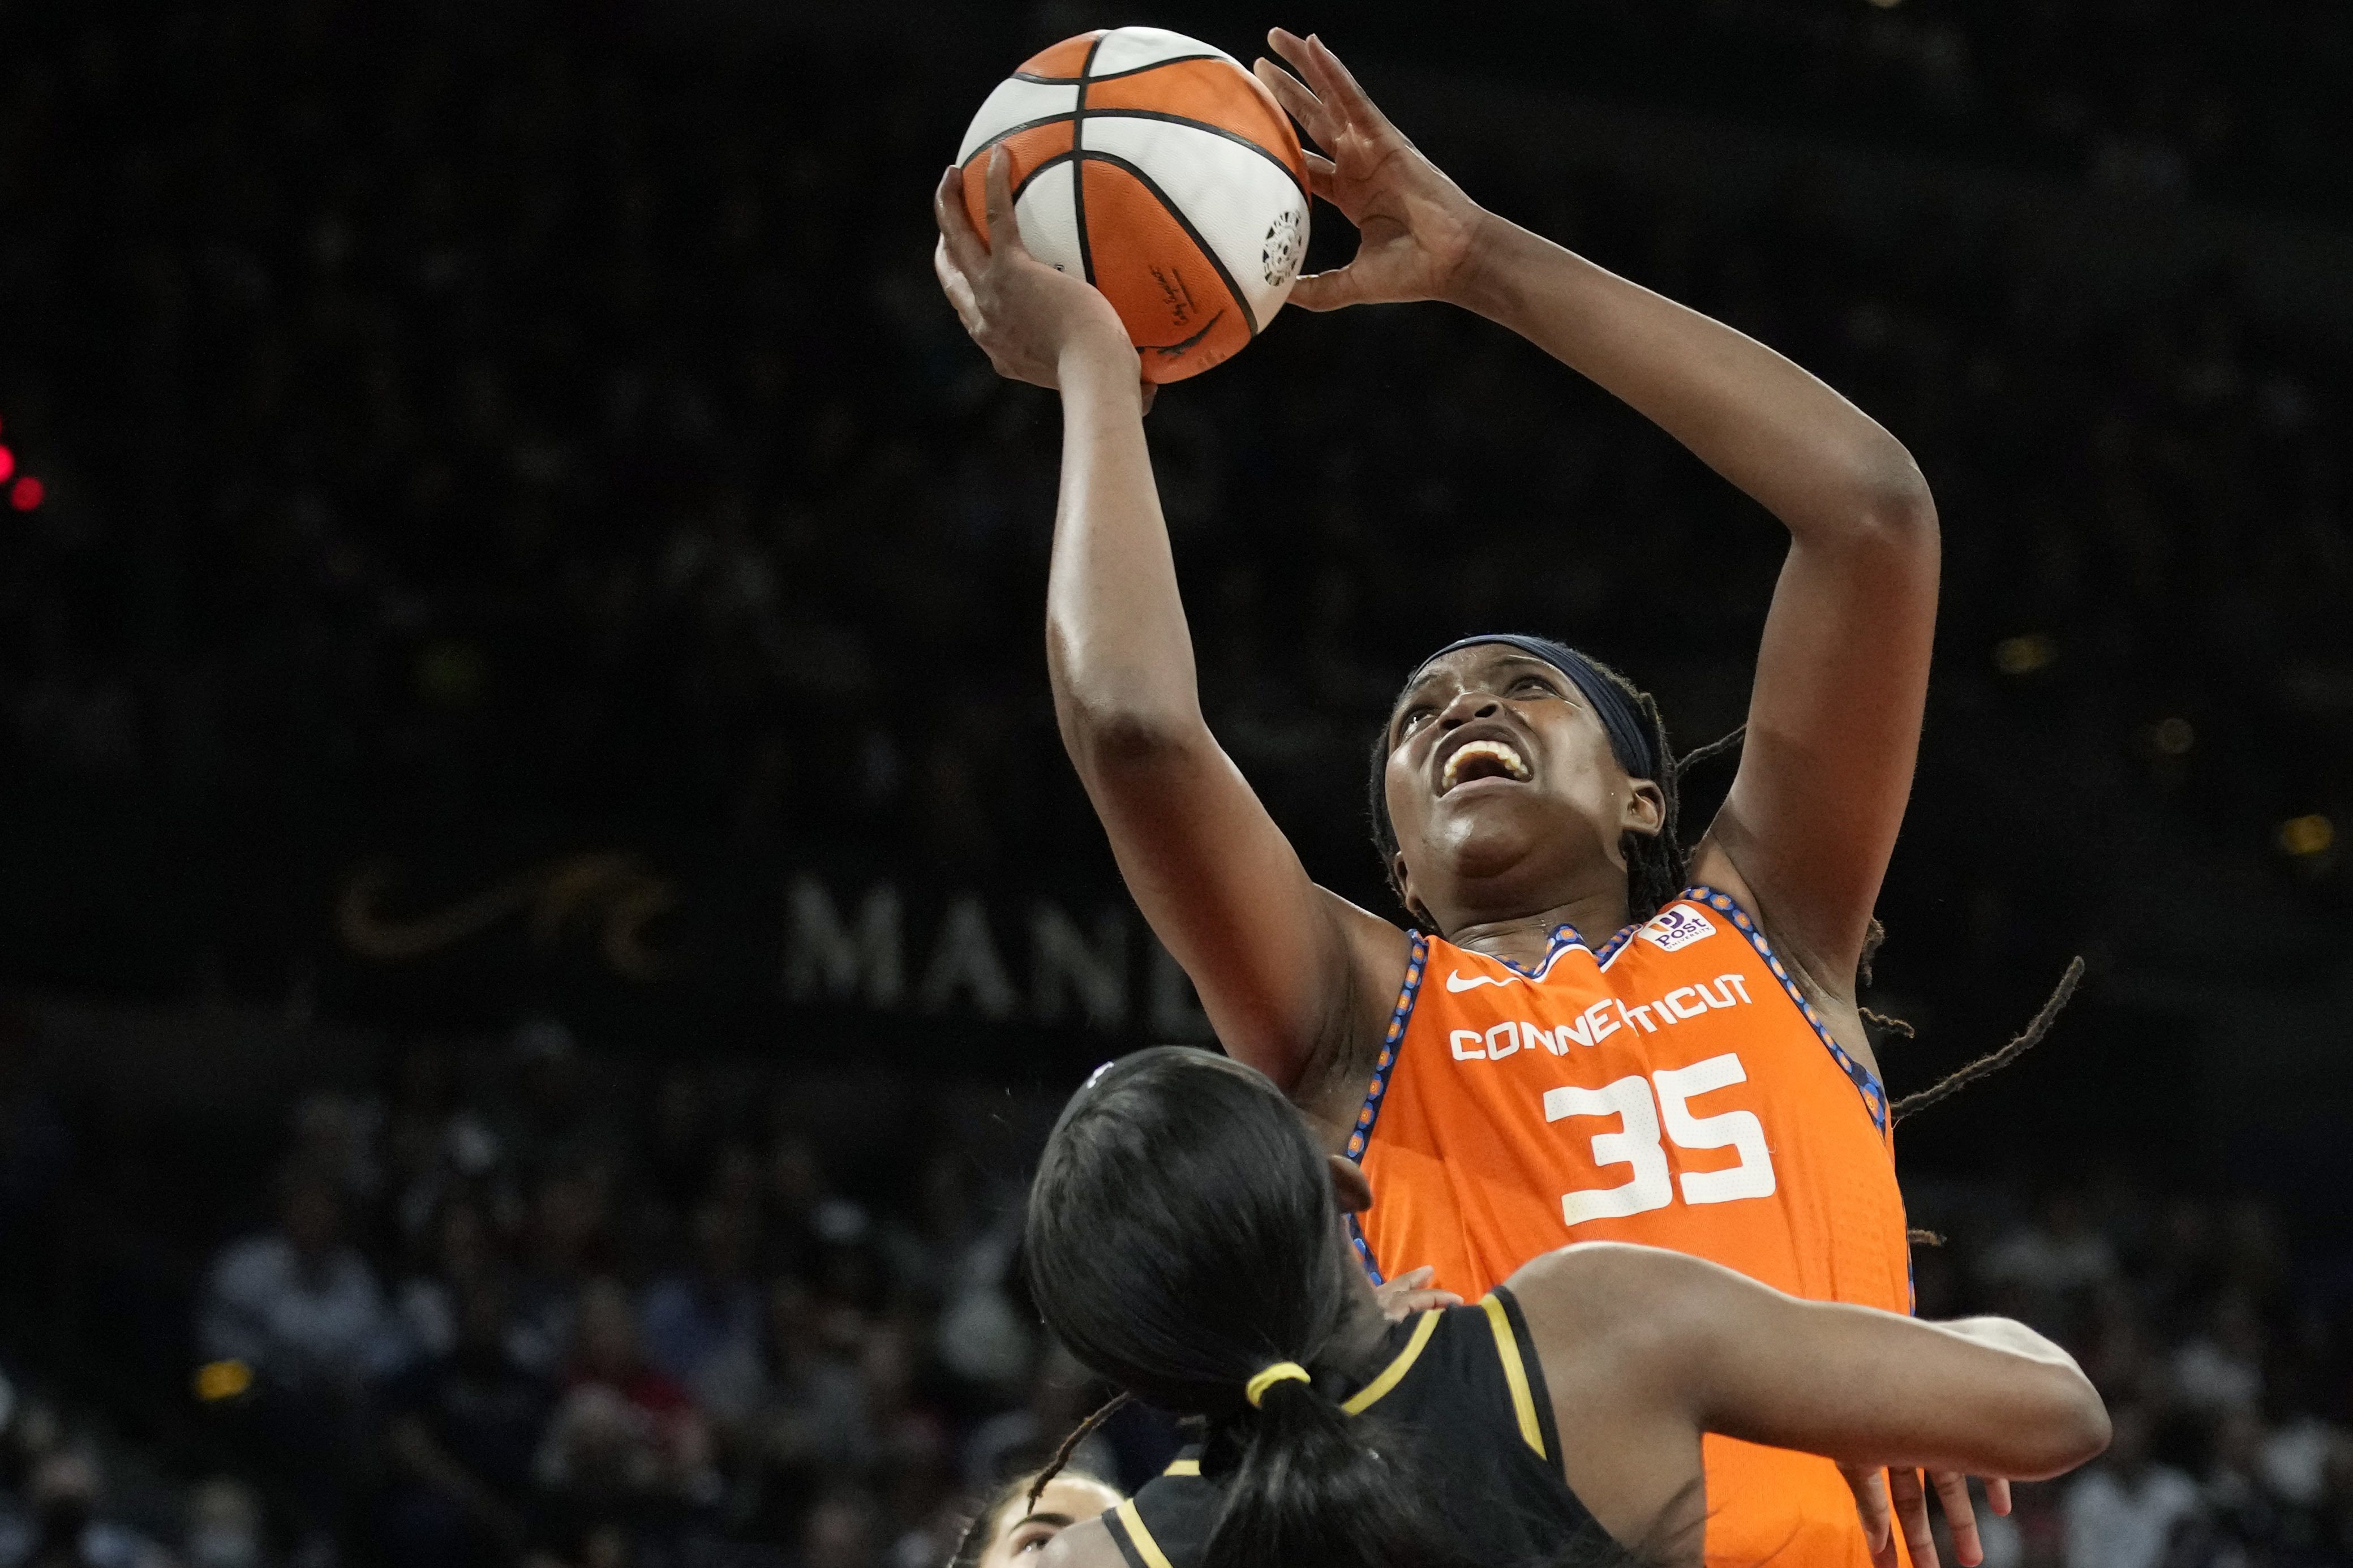 Liberty's sisterhood rooting for team's first-ever WNBA title - Newsday